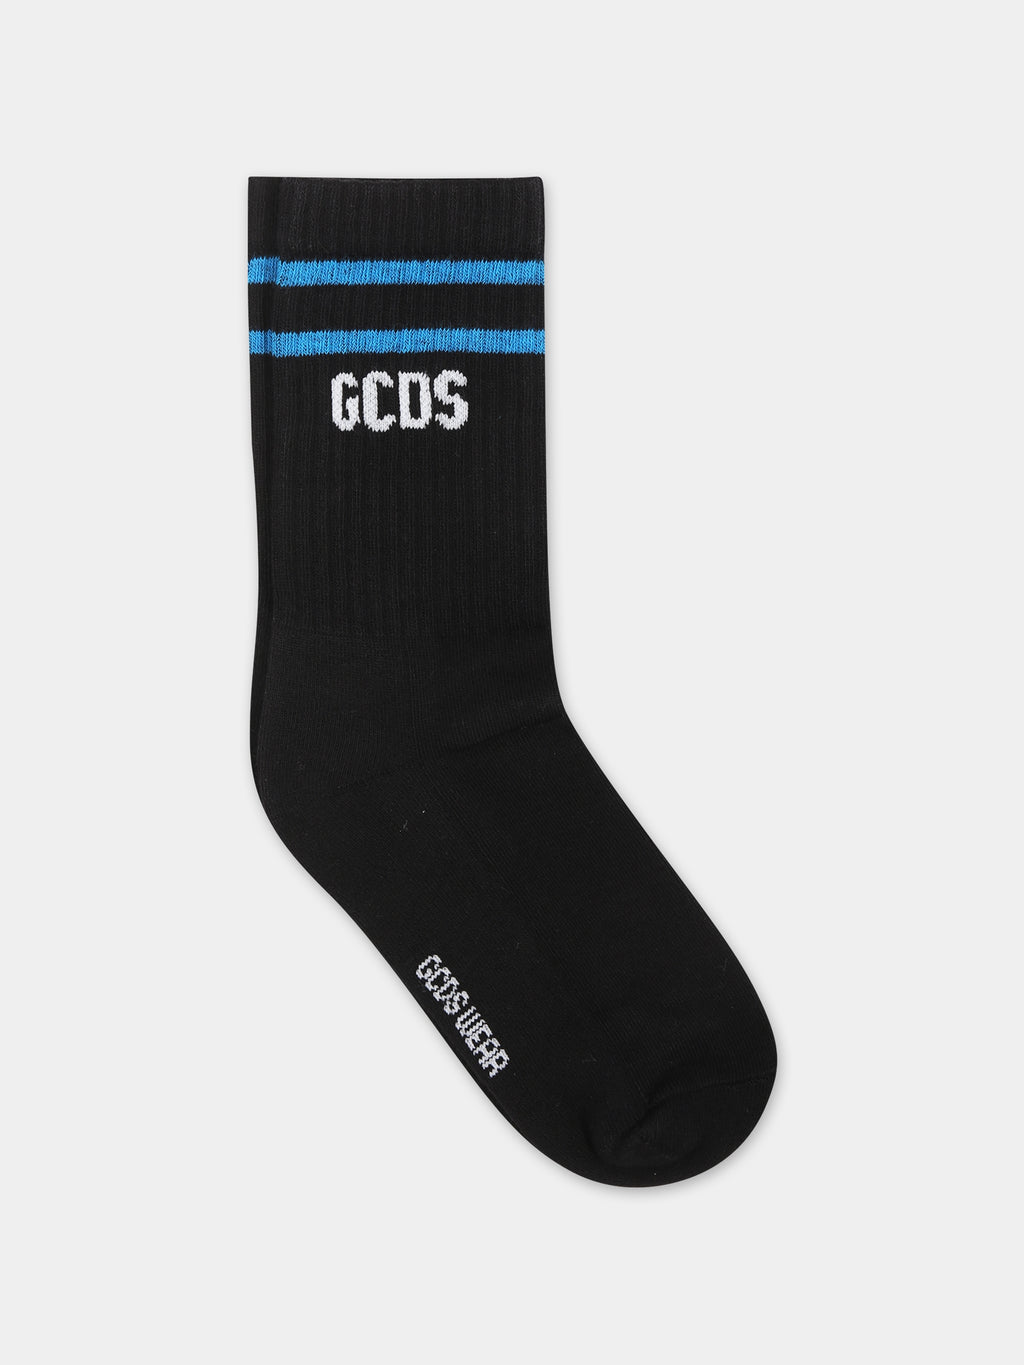 Black socks for kids with logo